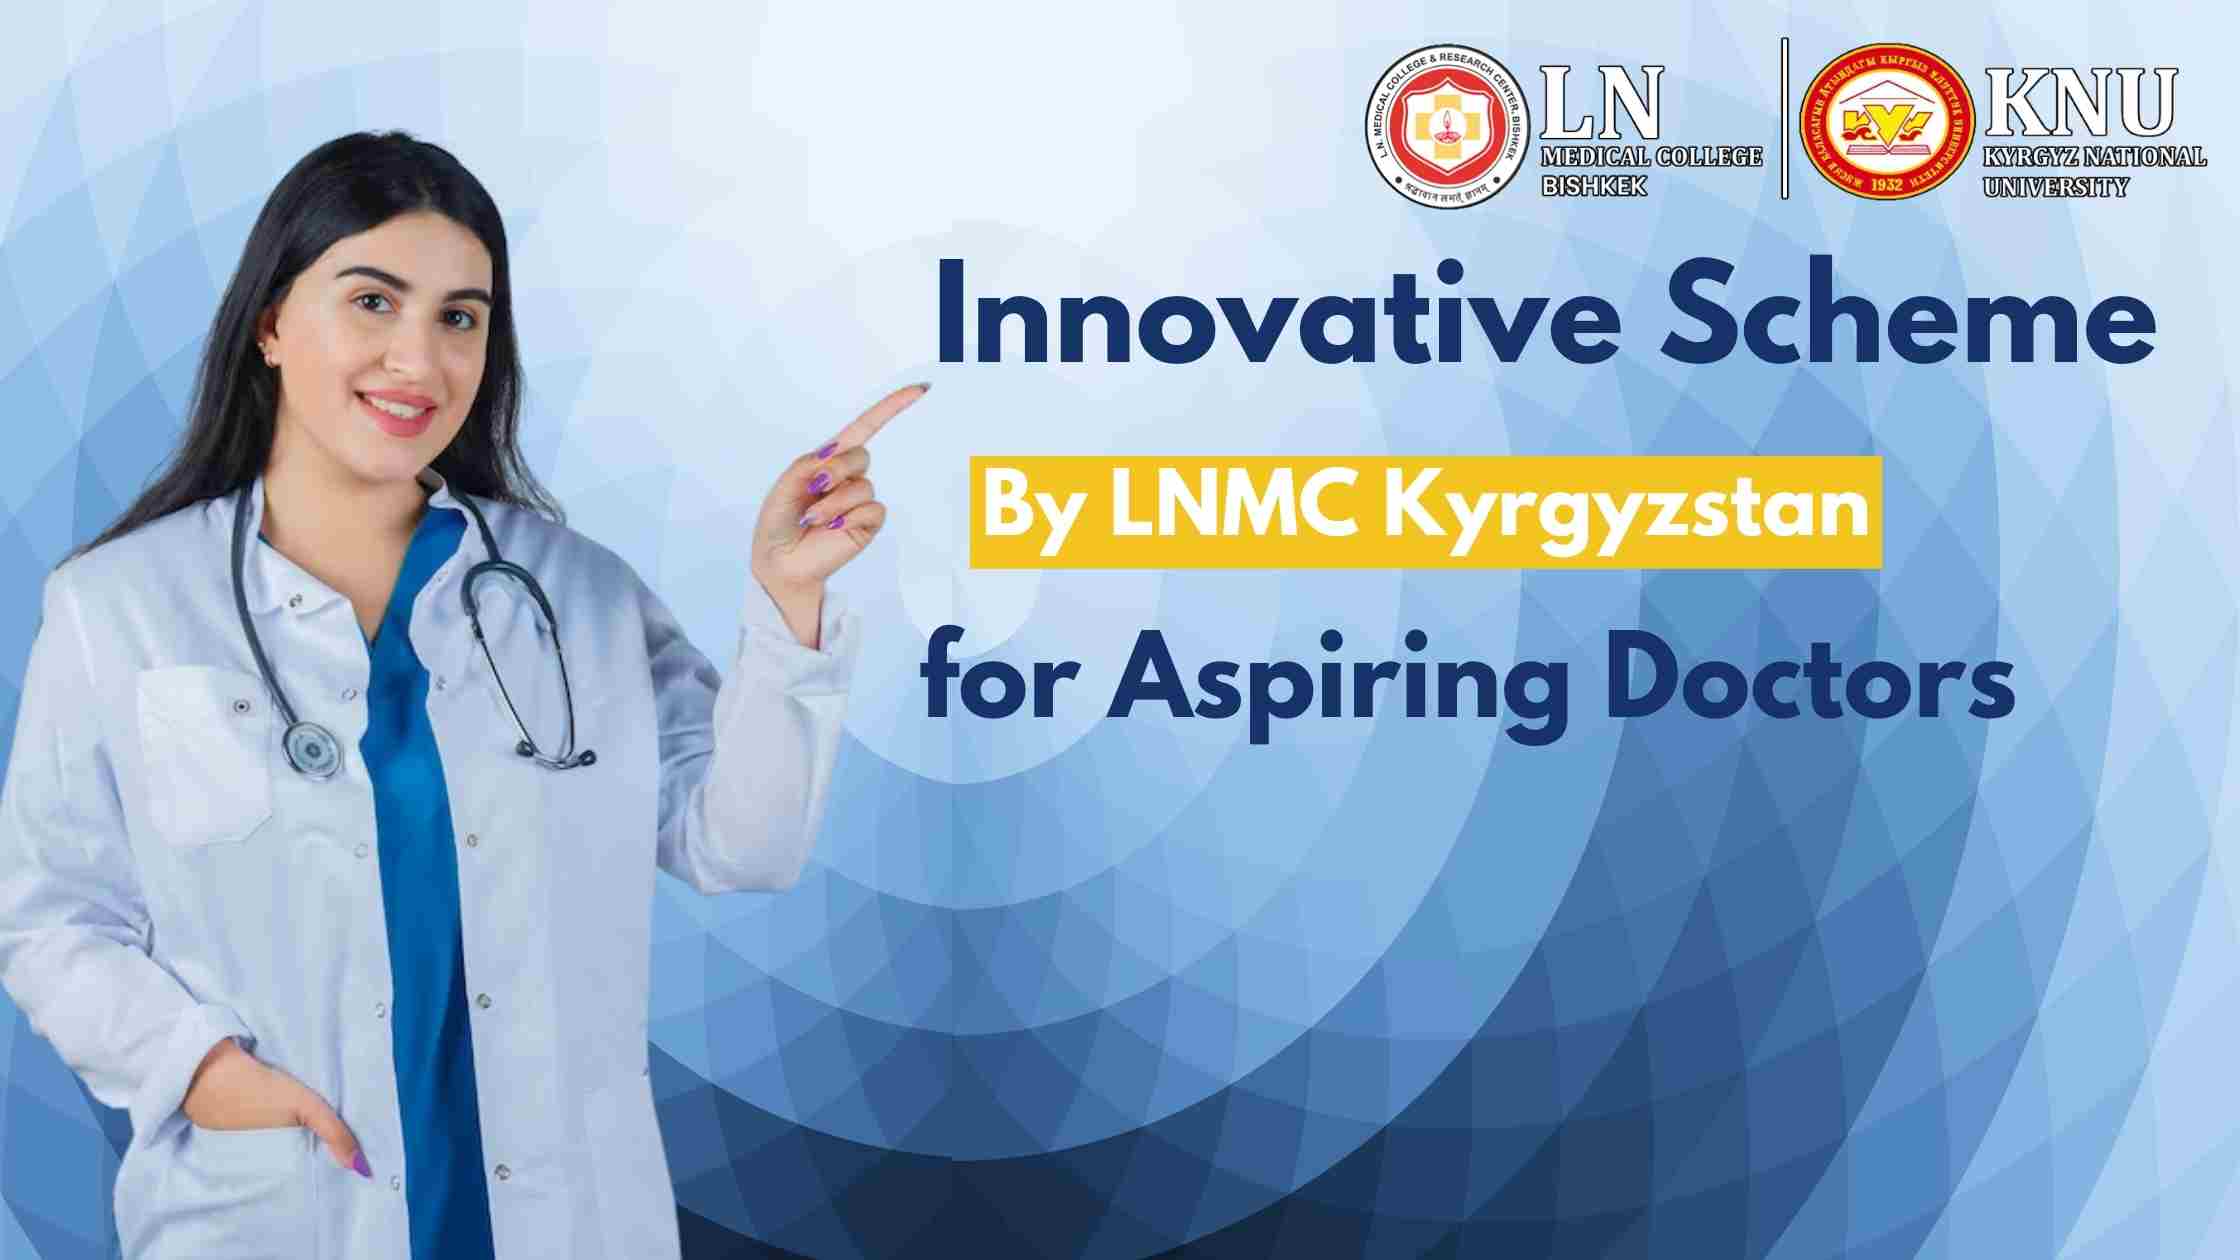 LNMC's Innovative Scheme